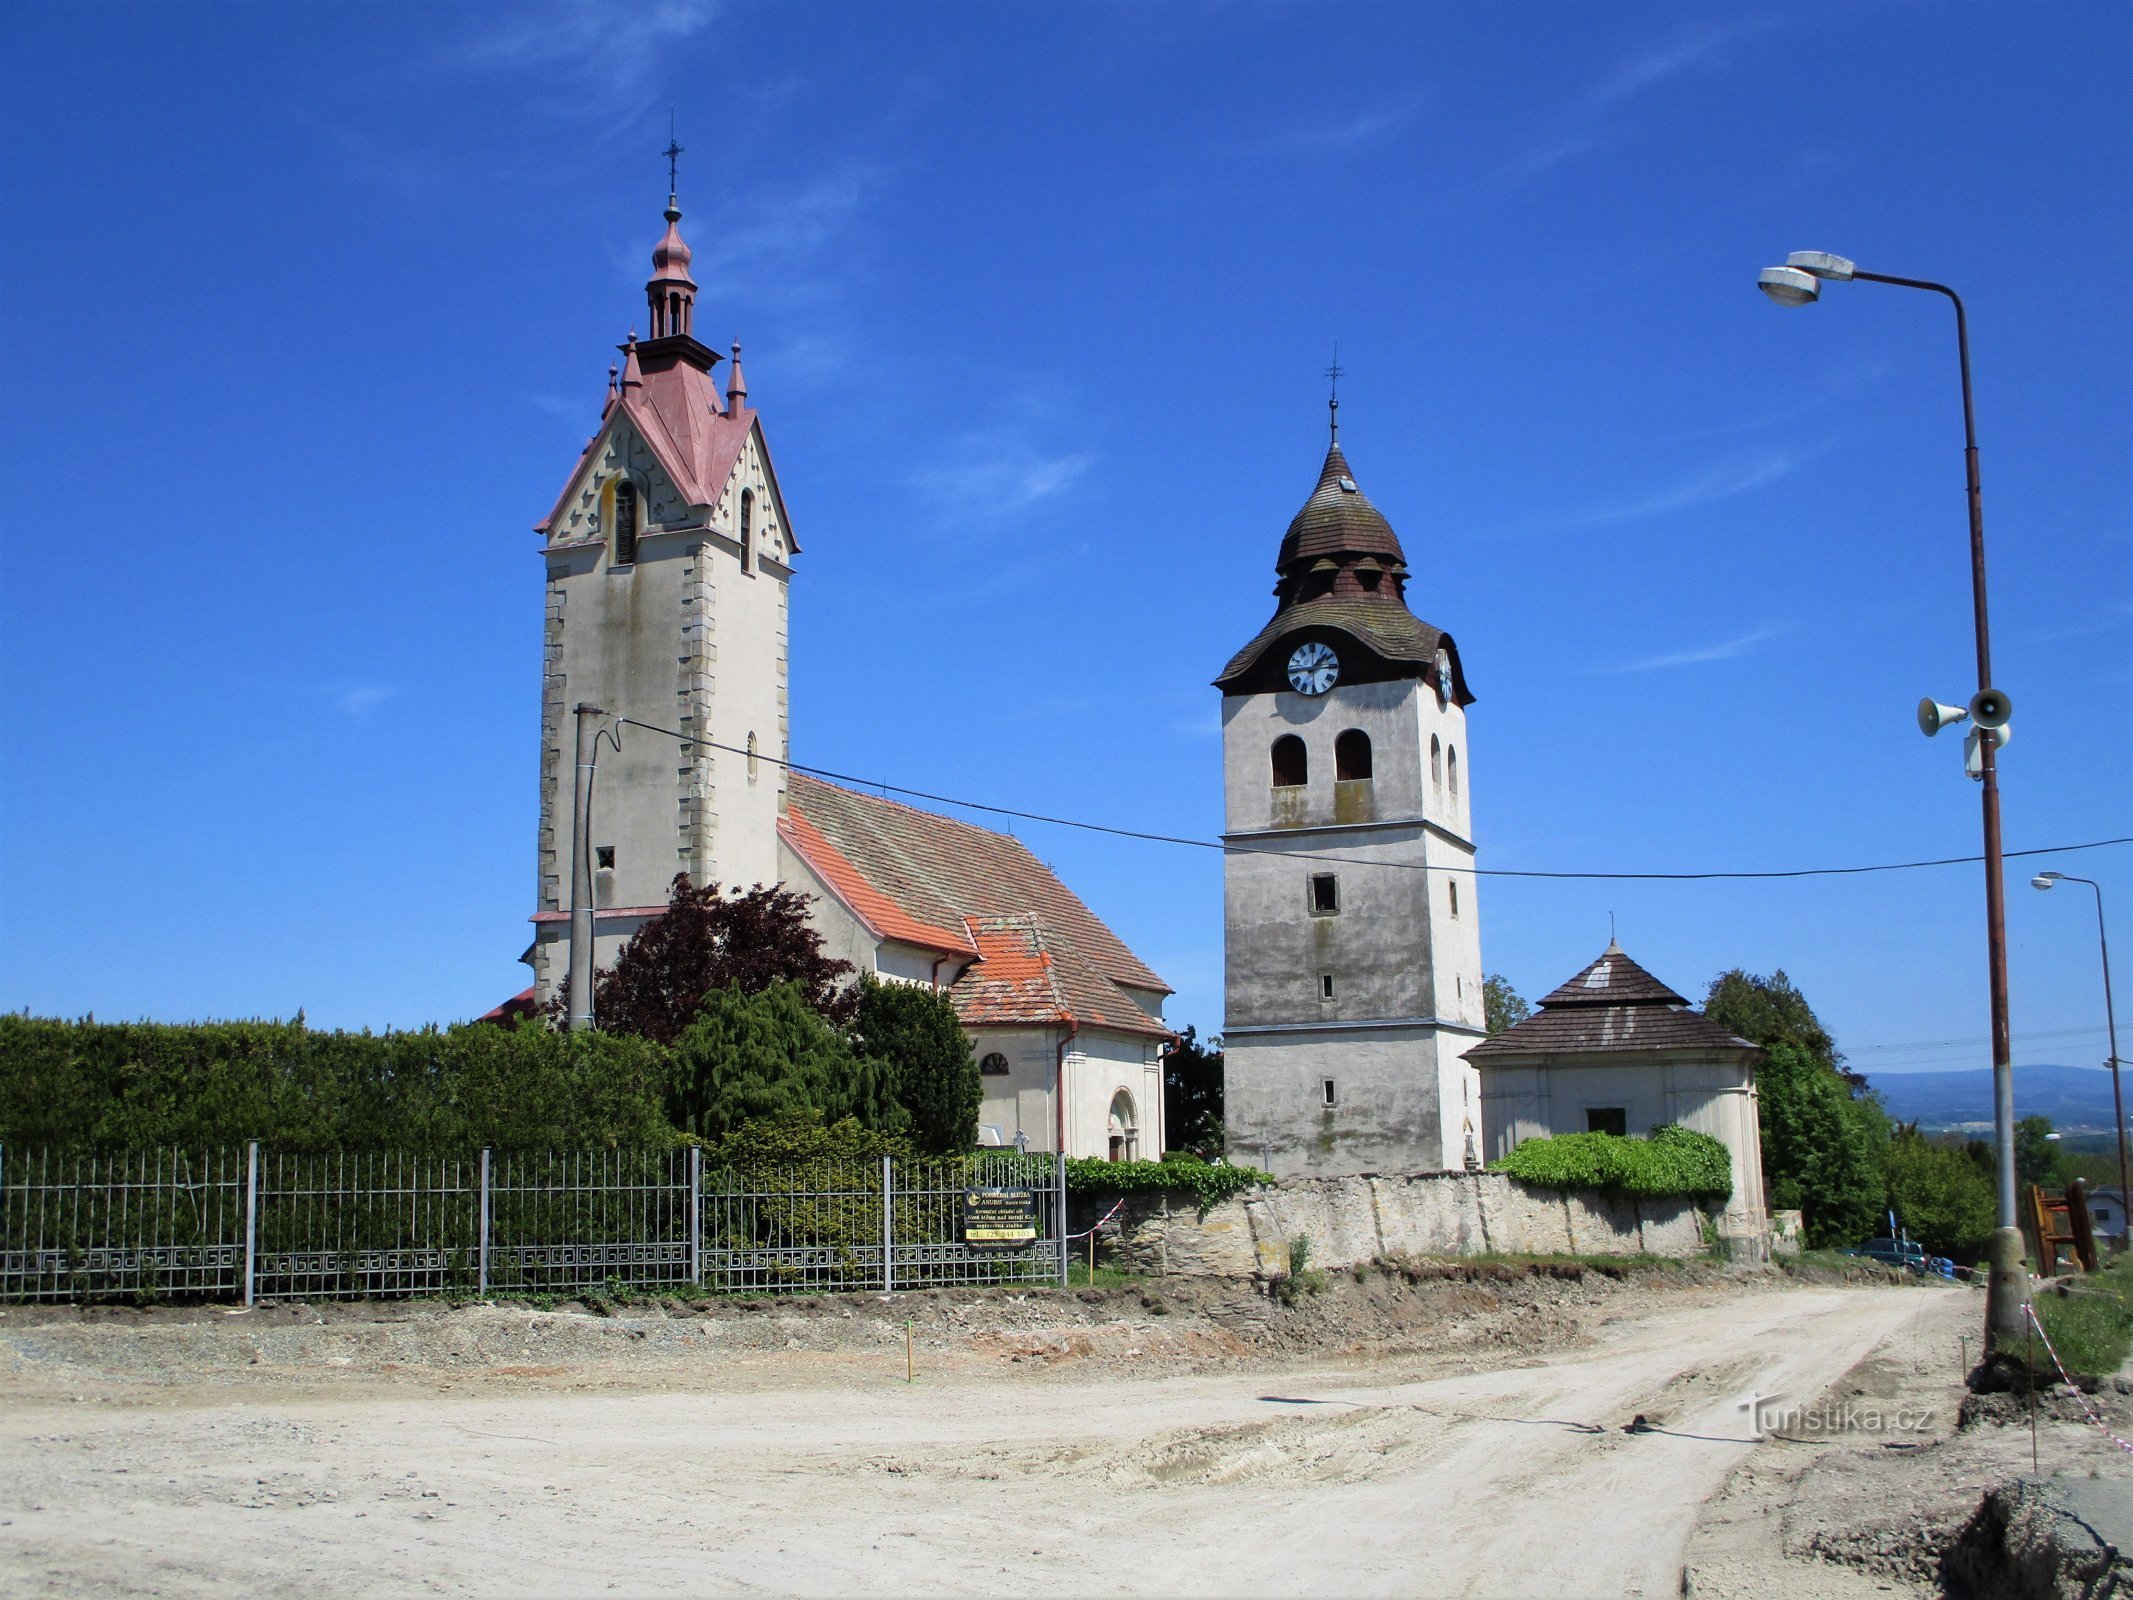 Chiesa di S. Nicola con il campanile (Bohuslavice nad Metují, 18.5.2020/XNUMX/XNUMX)